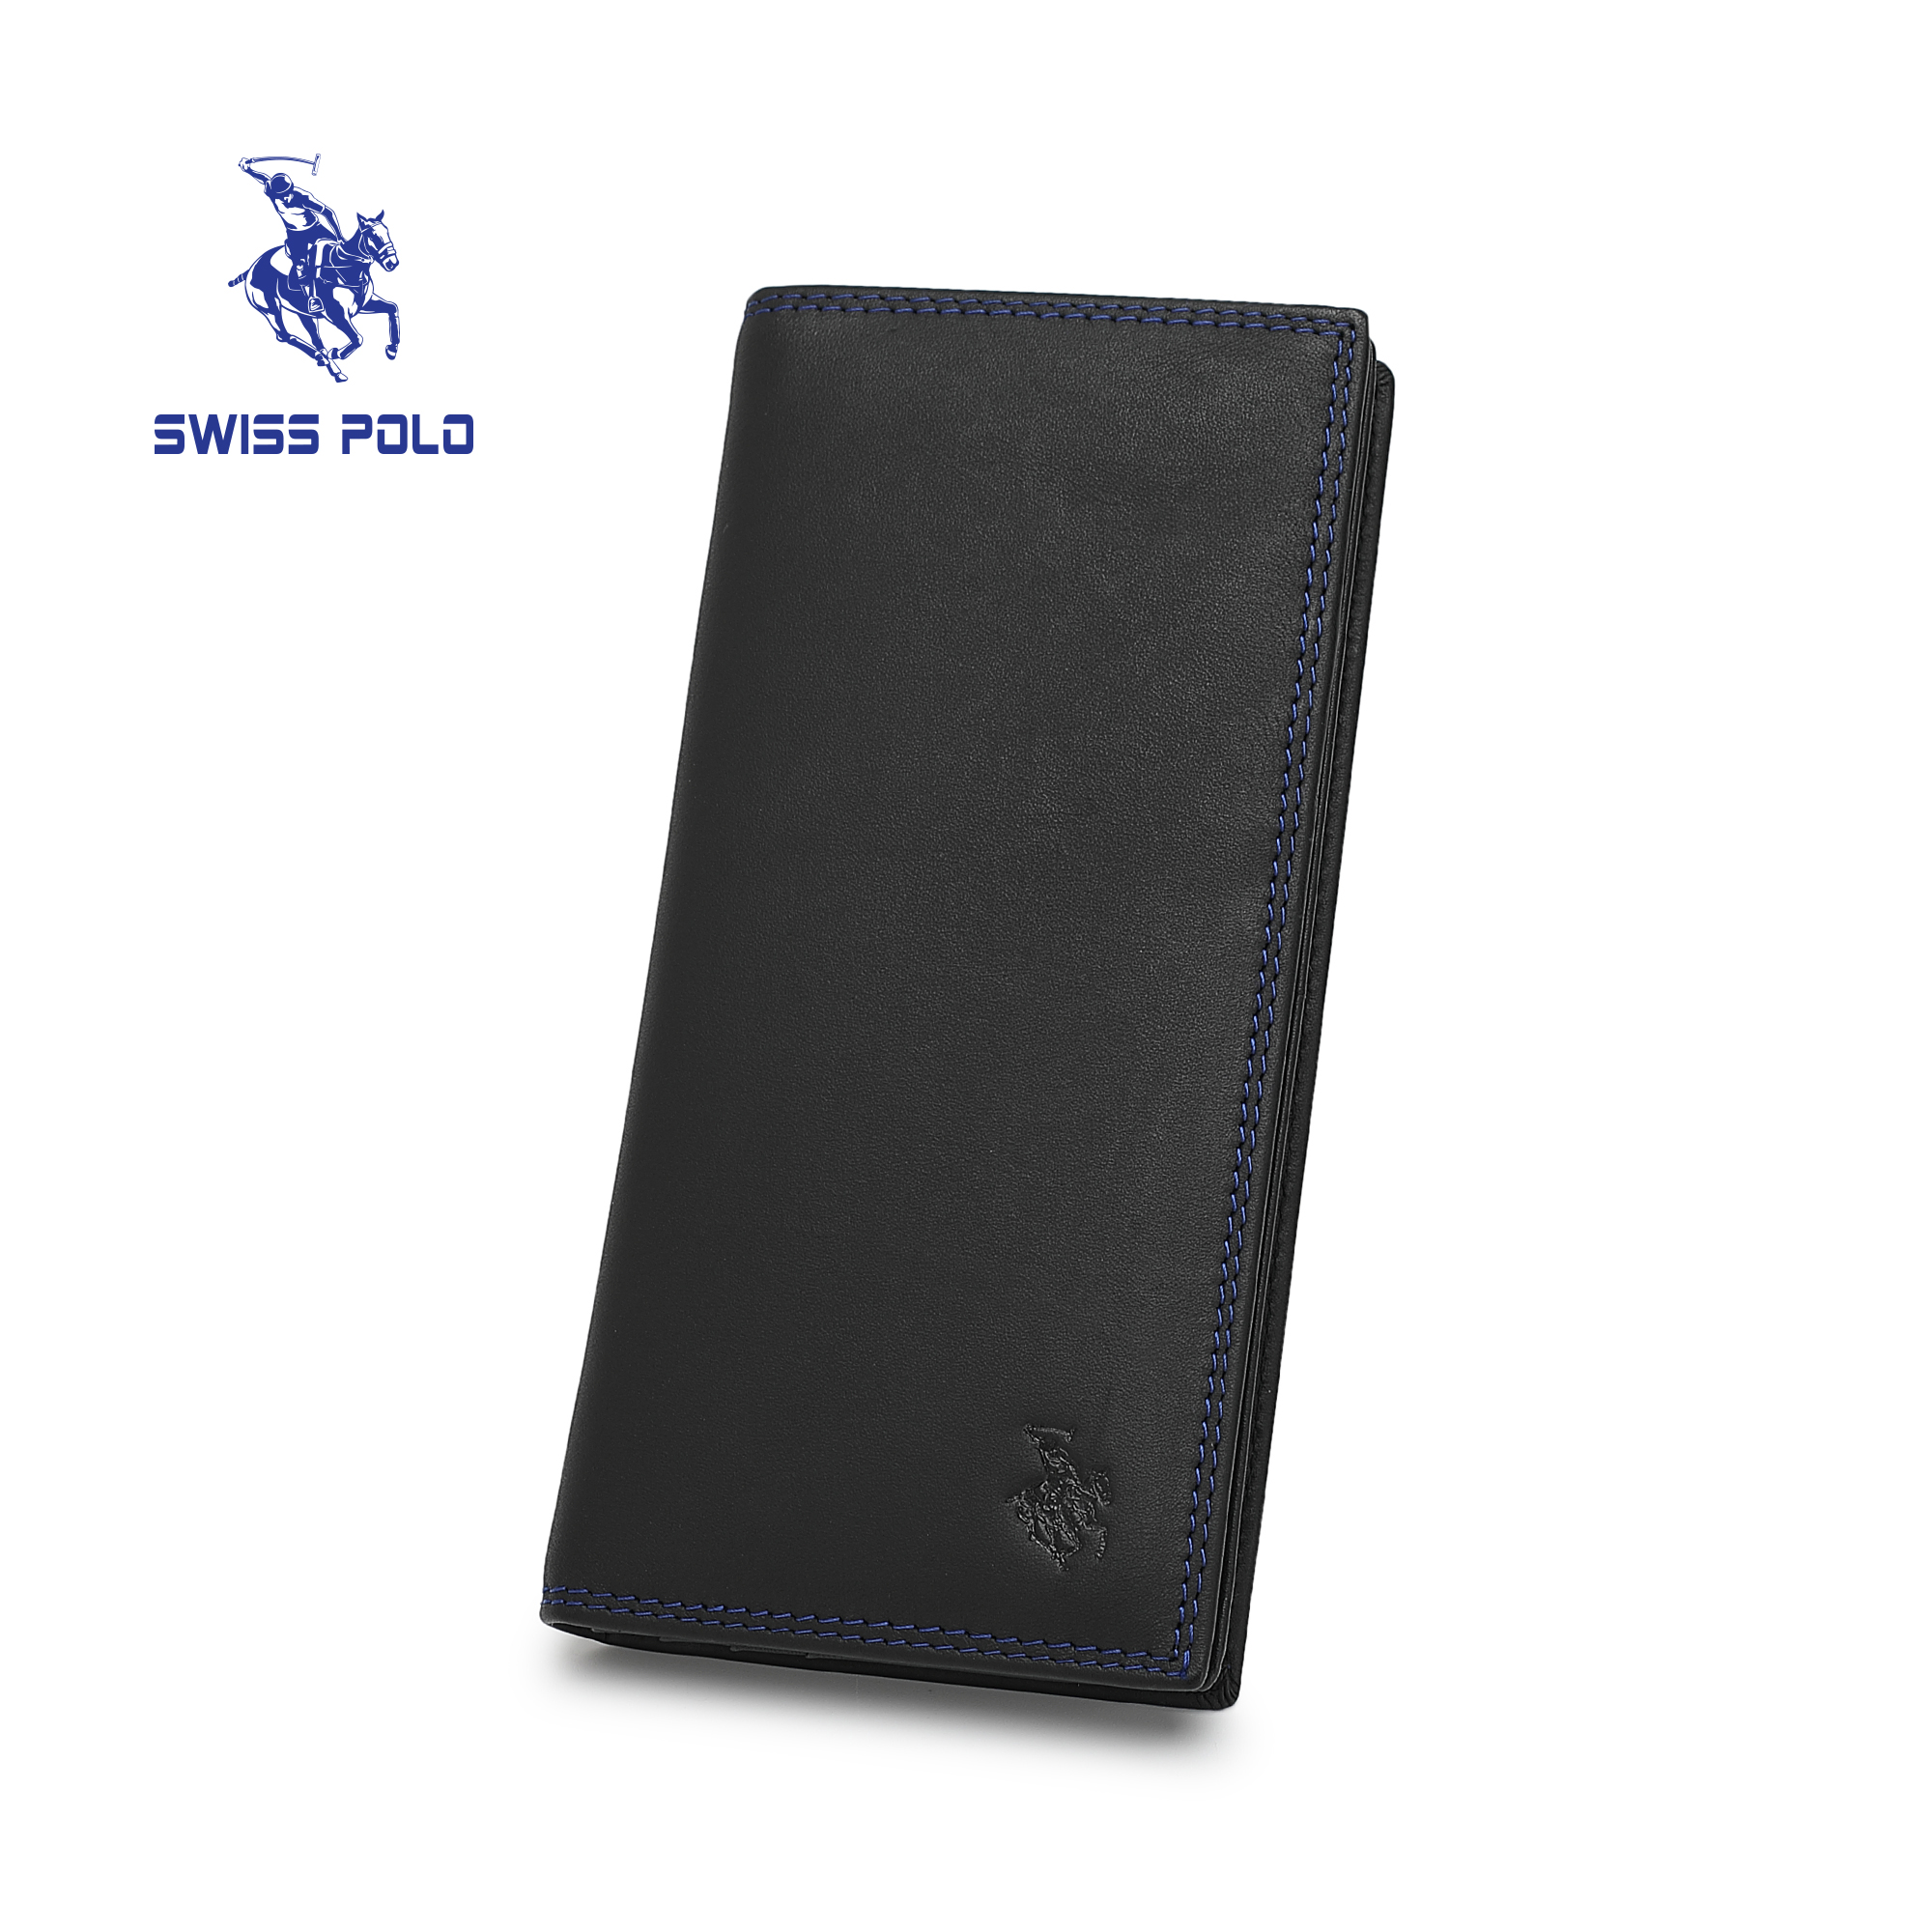 SWISS POLO Genuine Leather RFID Long Wallet SW 181-1 BLACK